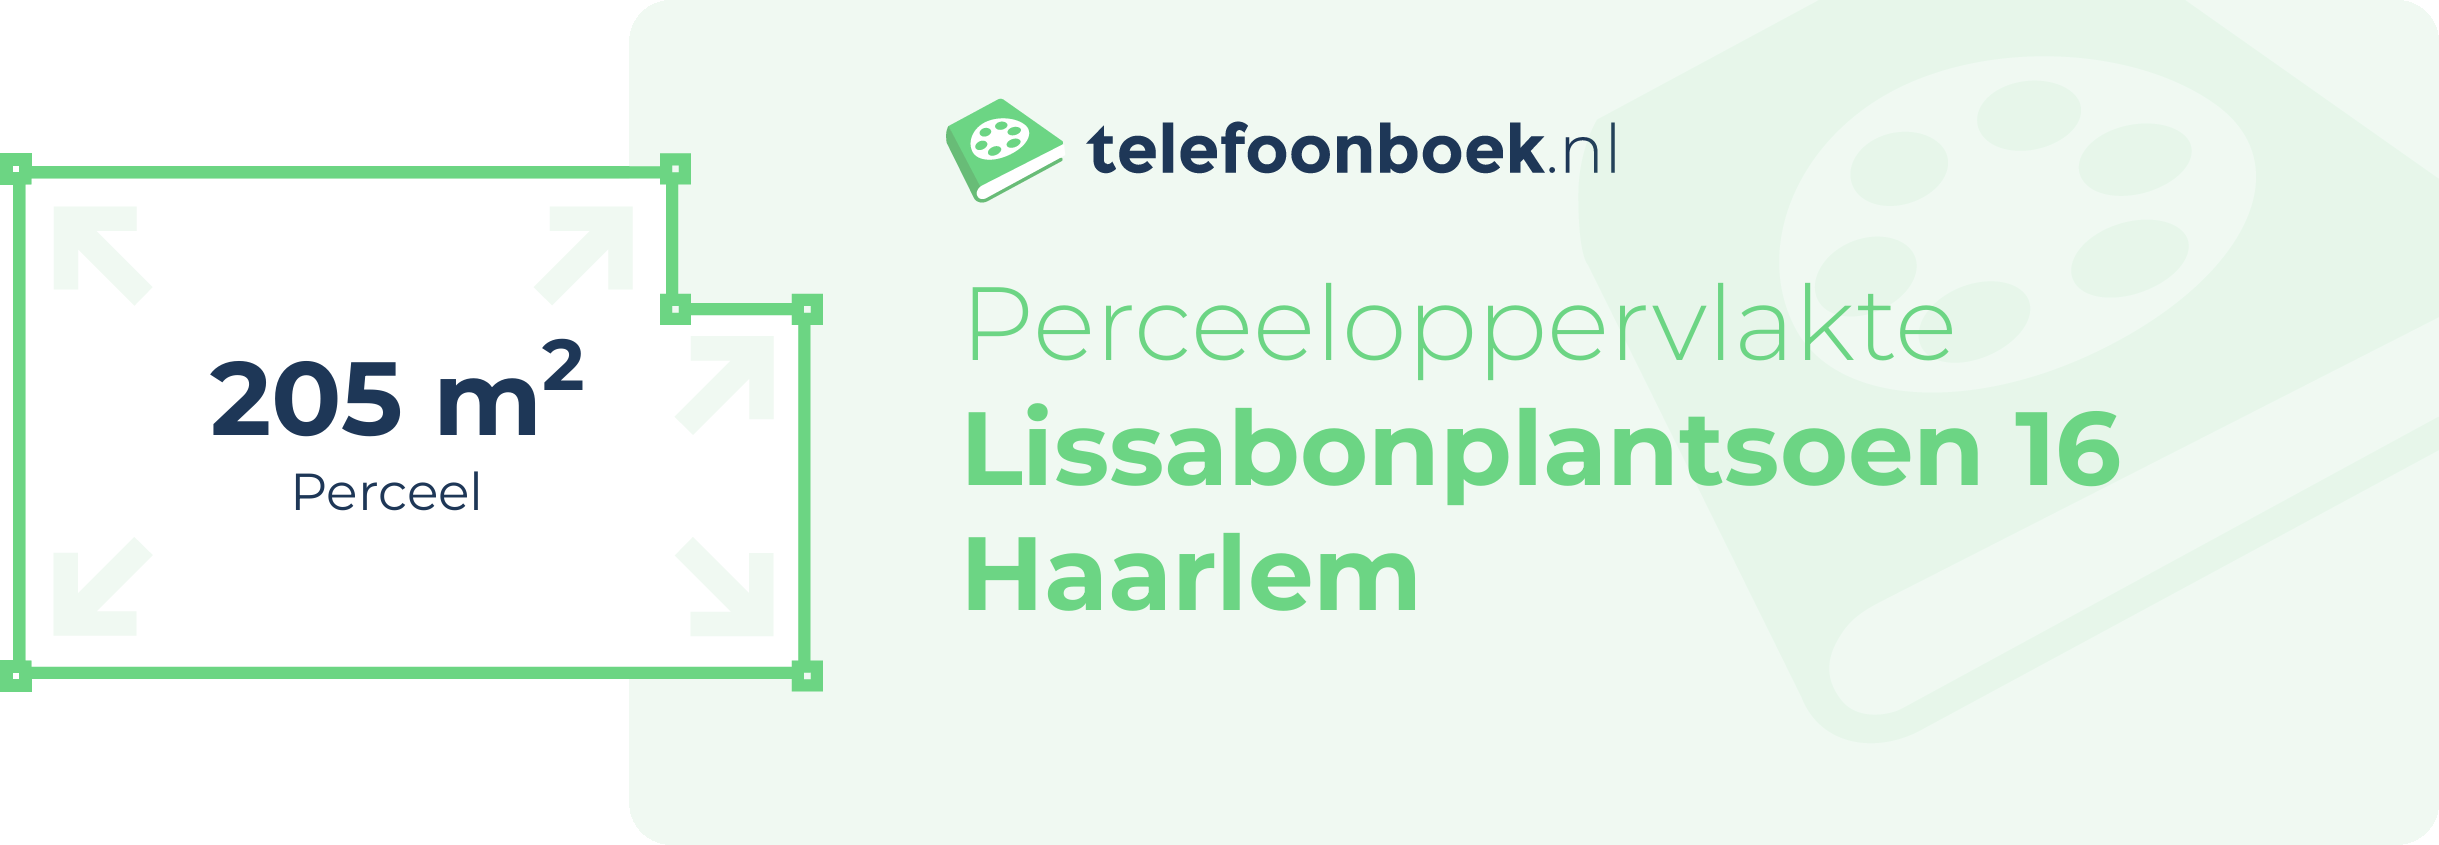 Perceeloppervlakte Lissabonplantsoen 16 Haarlem